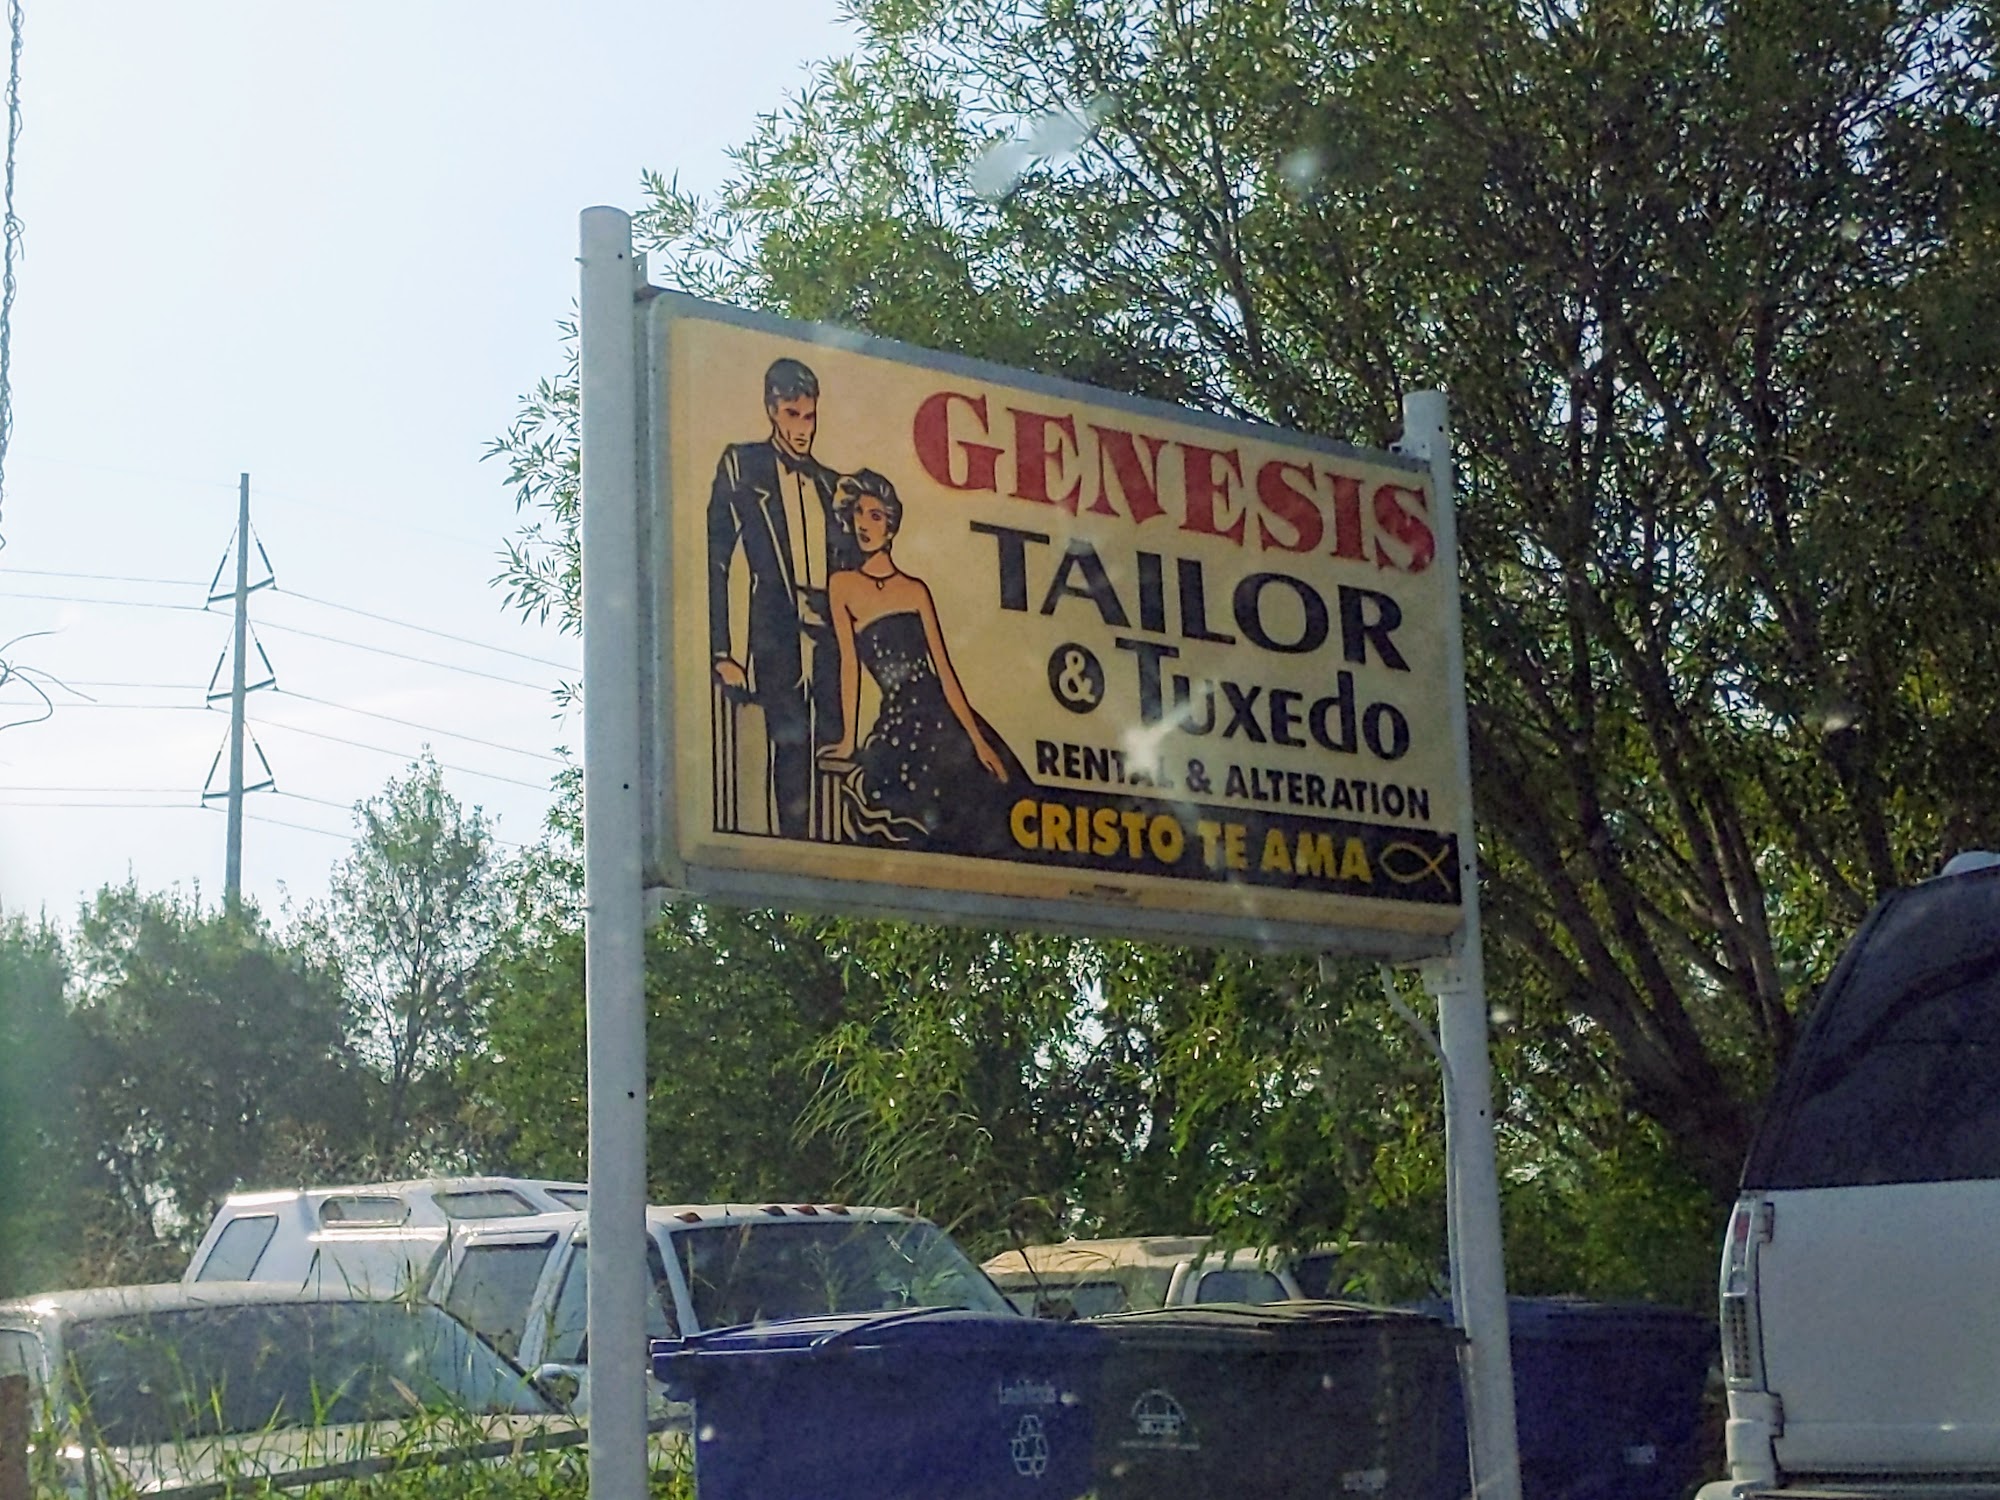 Genesis Tailor Shop & Tuxedo